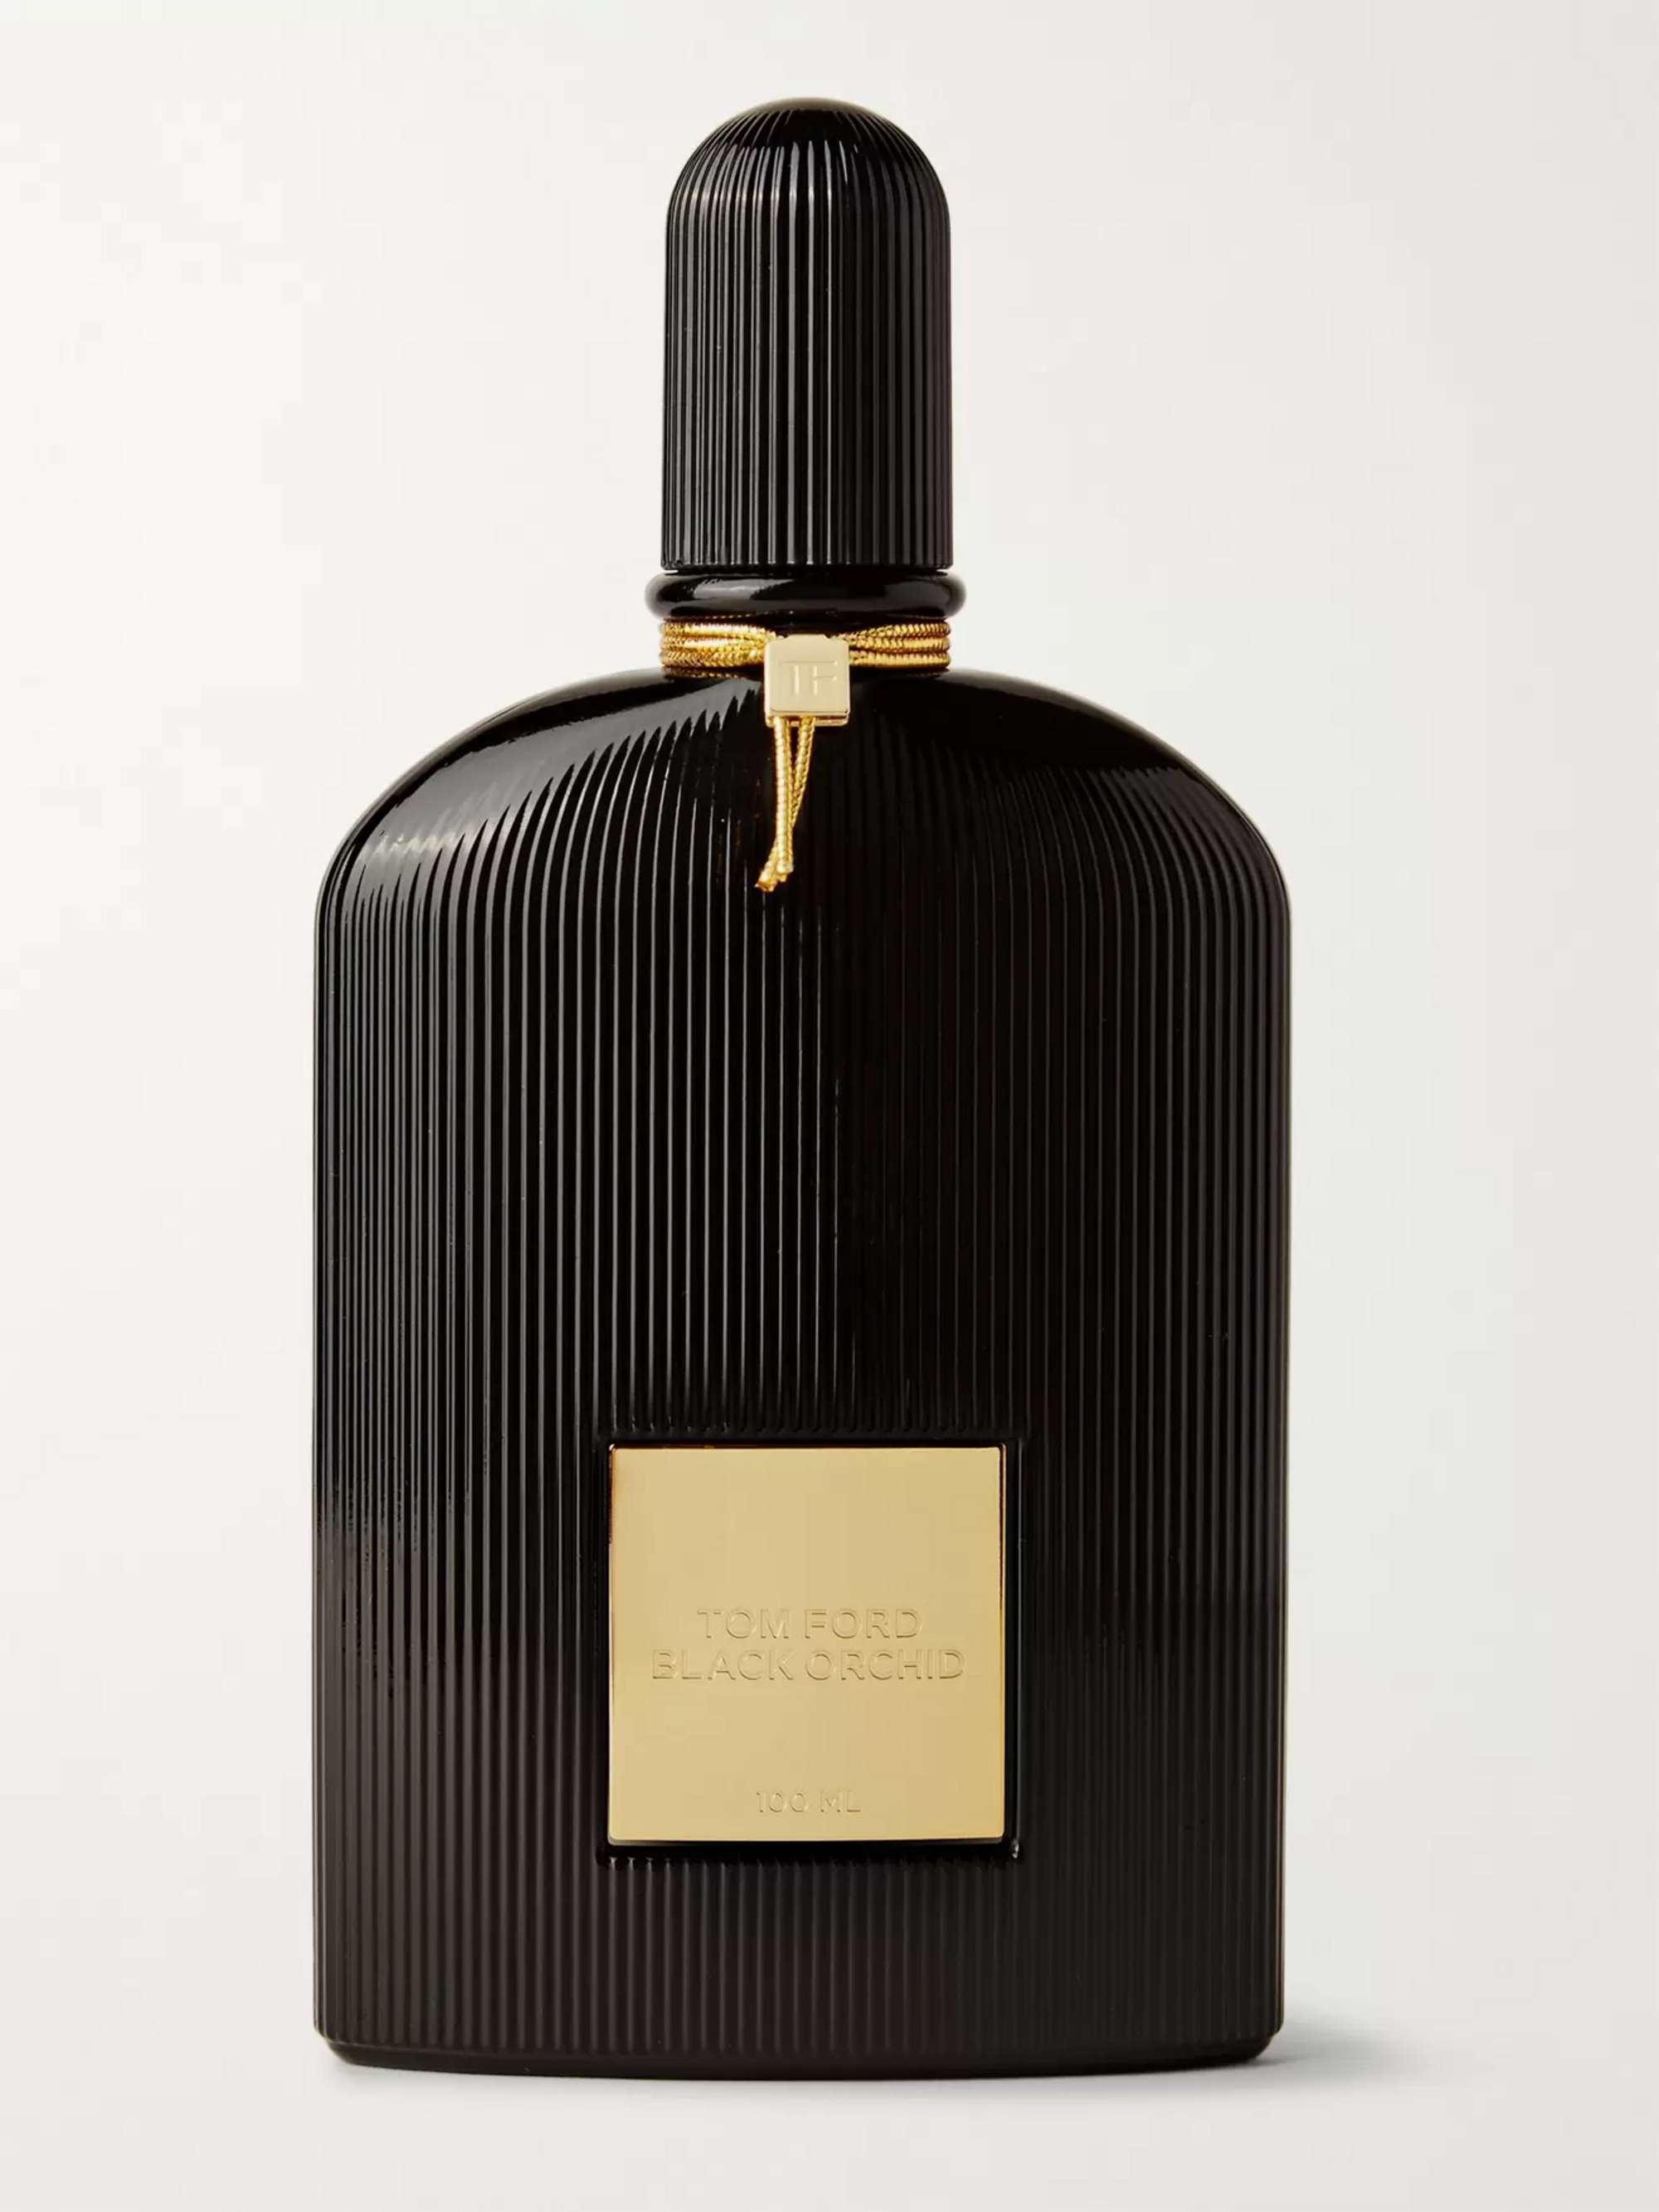 TOM FORD BEAUTY Black Orchid Eau de Parfum - Black Truffle & Bergamot, 100ml